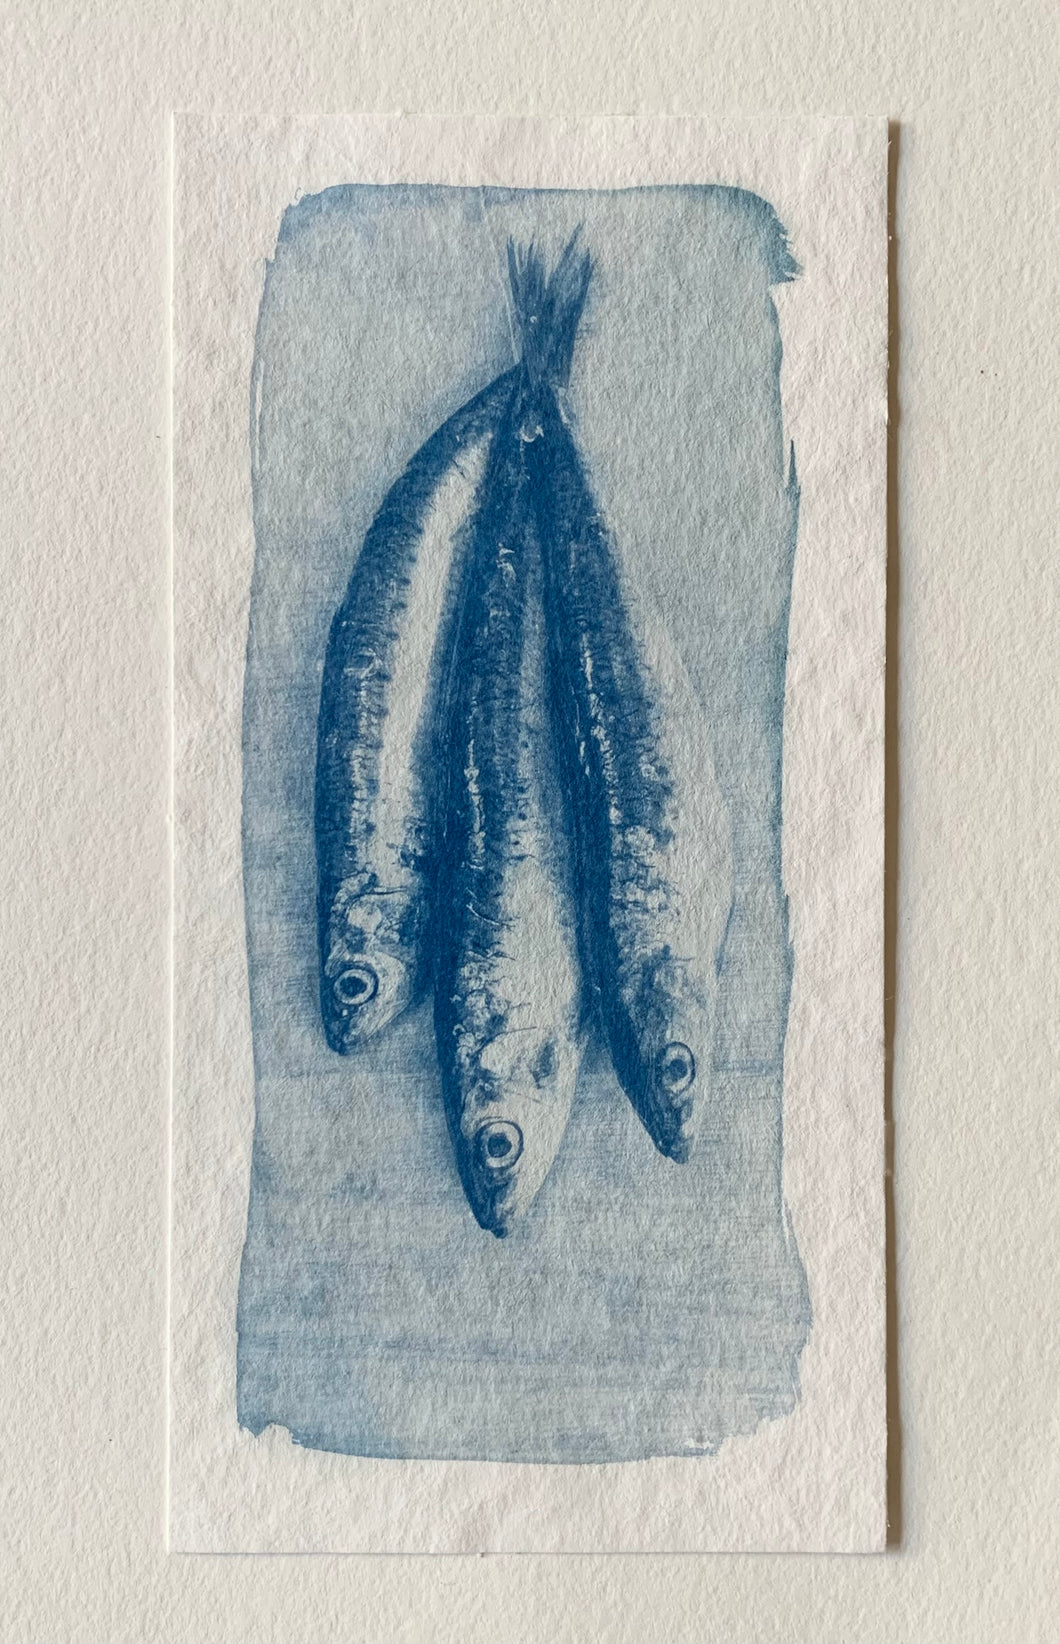 Trio de sardines, photographie cyanotype